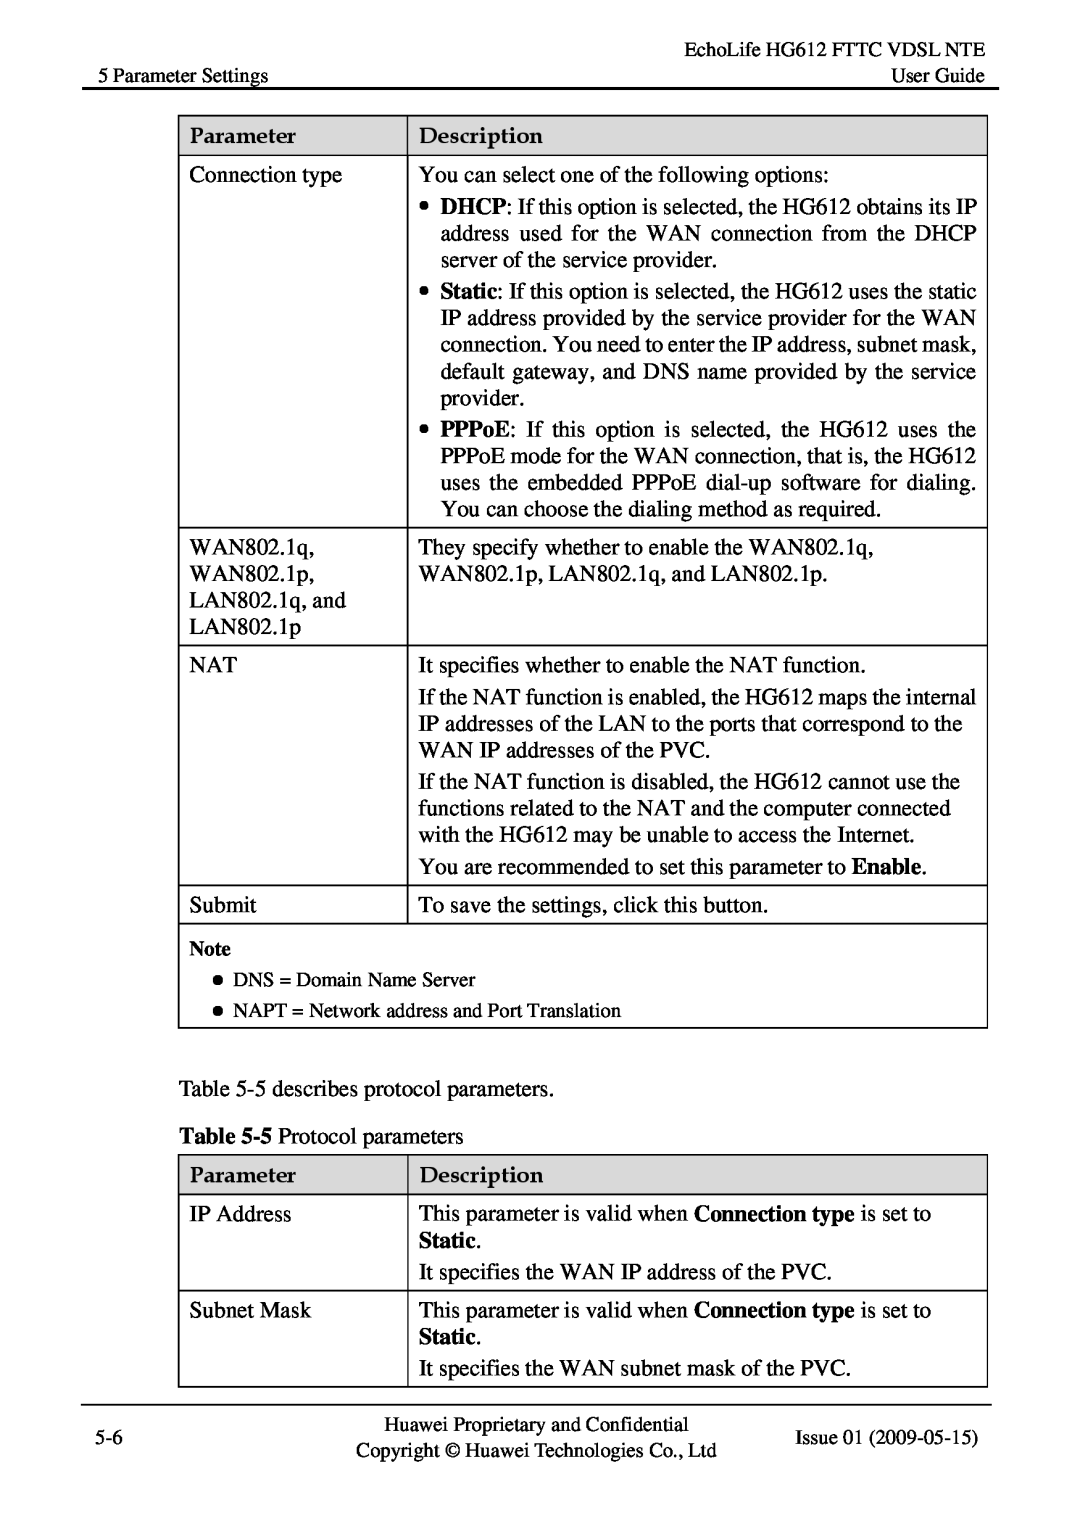 Huawei HG612FTTC VDSL NTE manual Parameter, Description, Static 